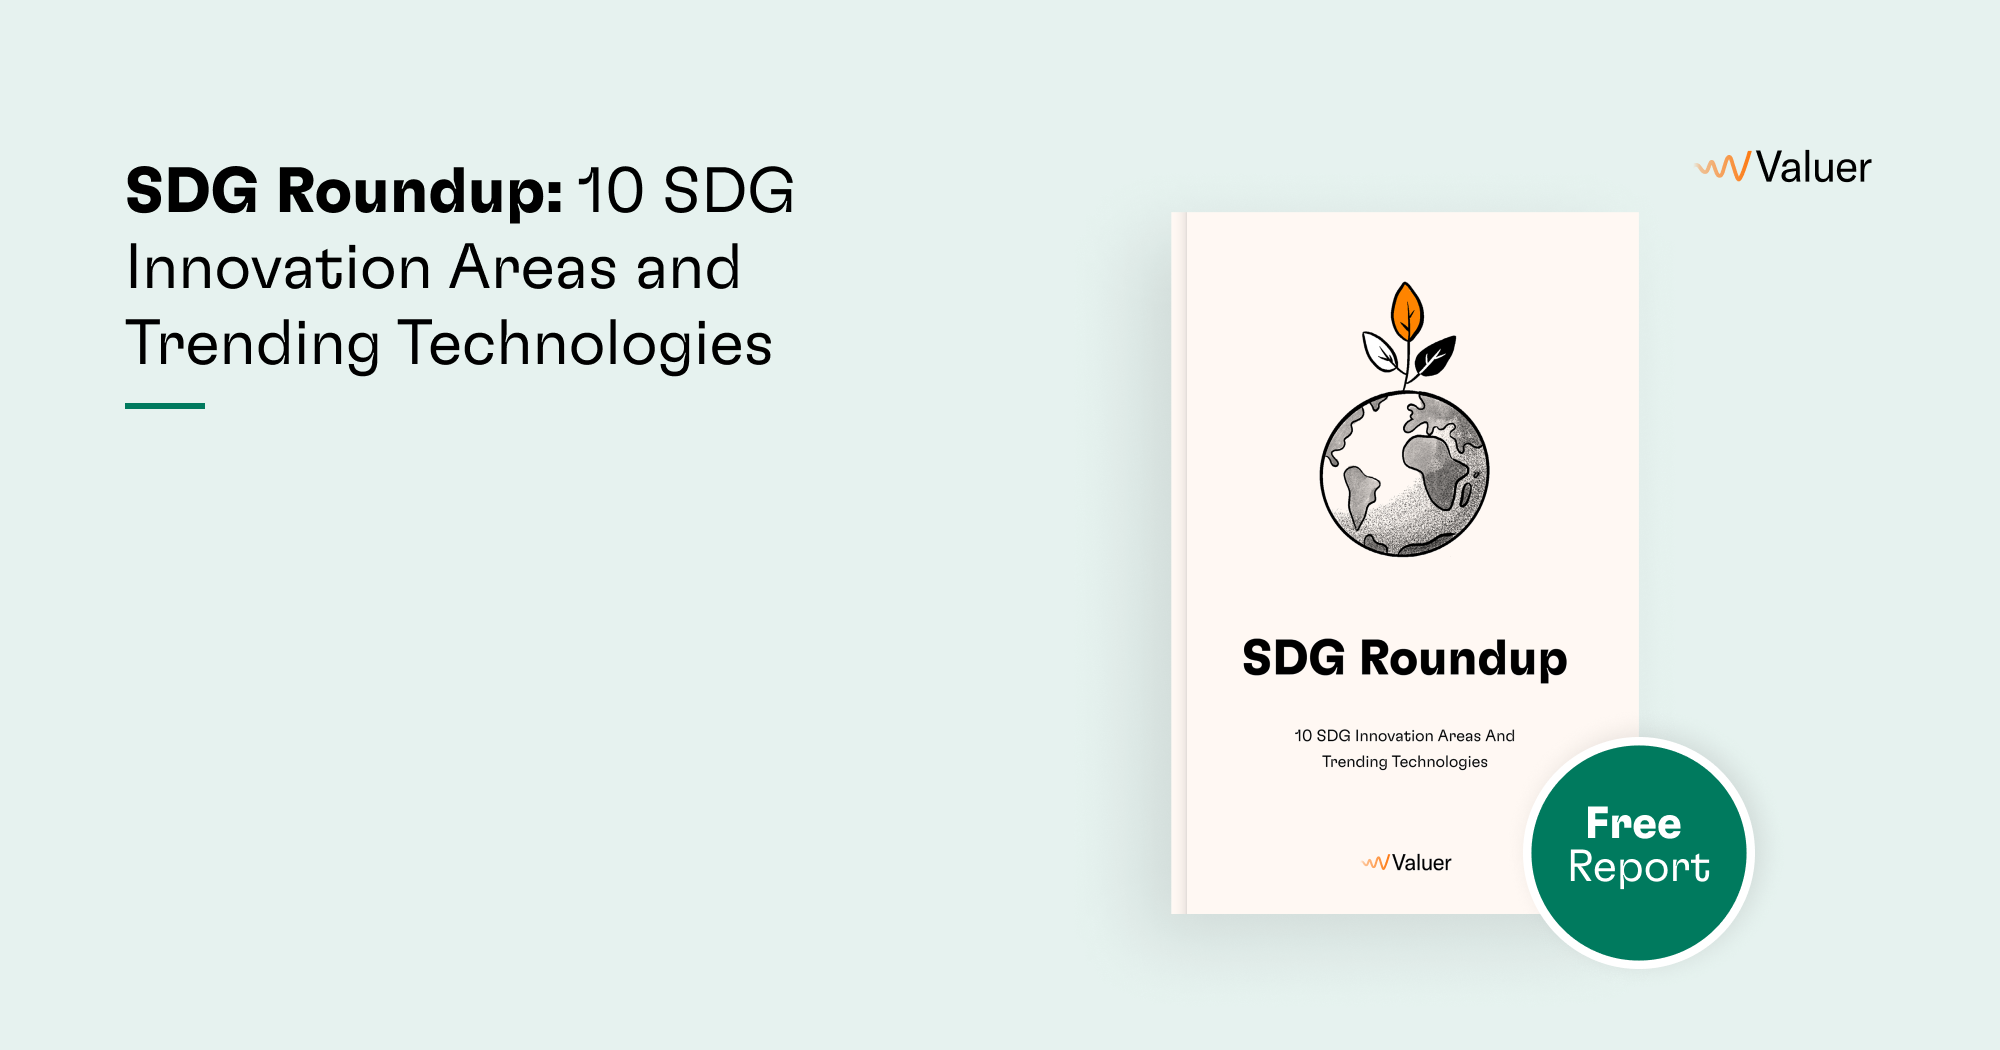 SDG Roundup - 10 SDG Innovation Areas and Trending Technologies